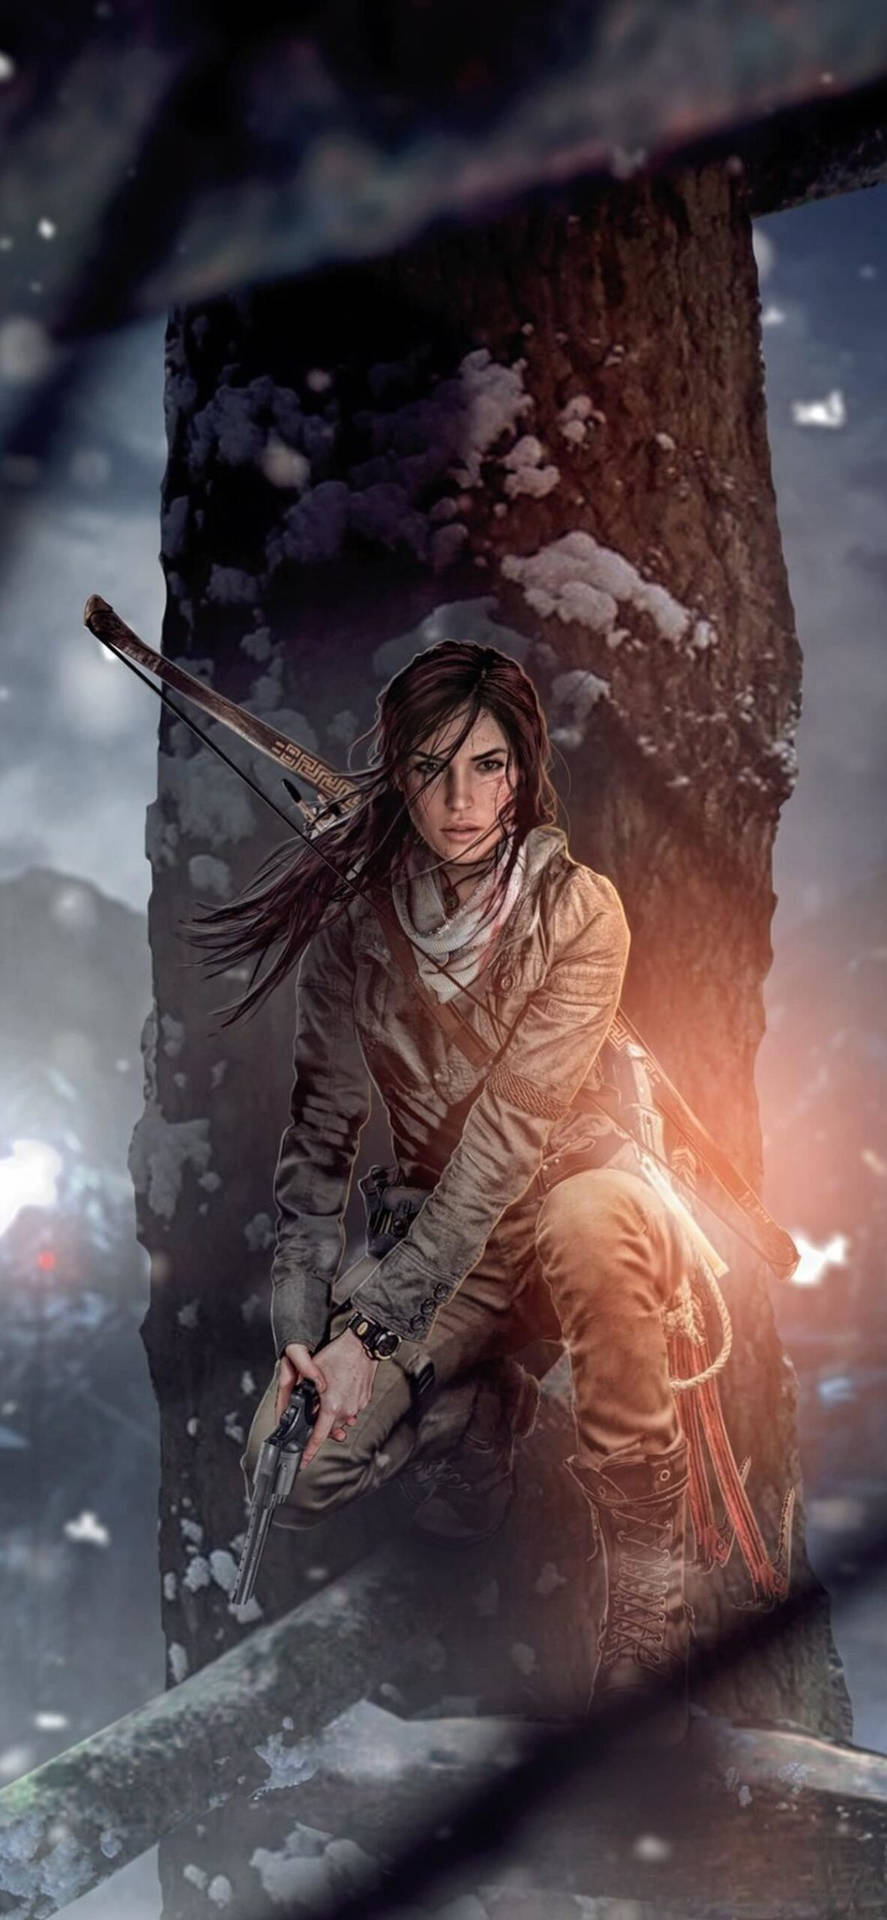 Lara On Fire Tomb Raider Iphone Wallpaper